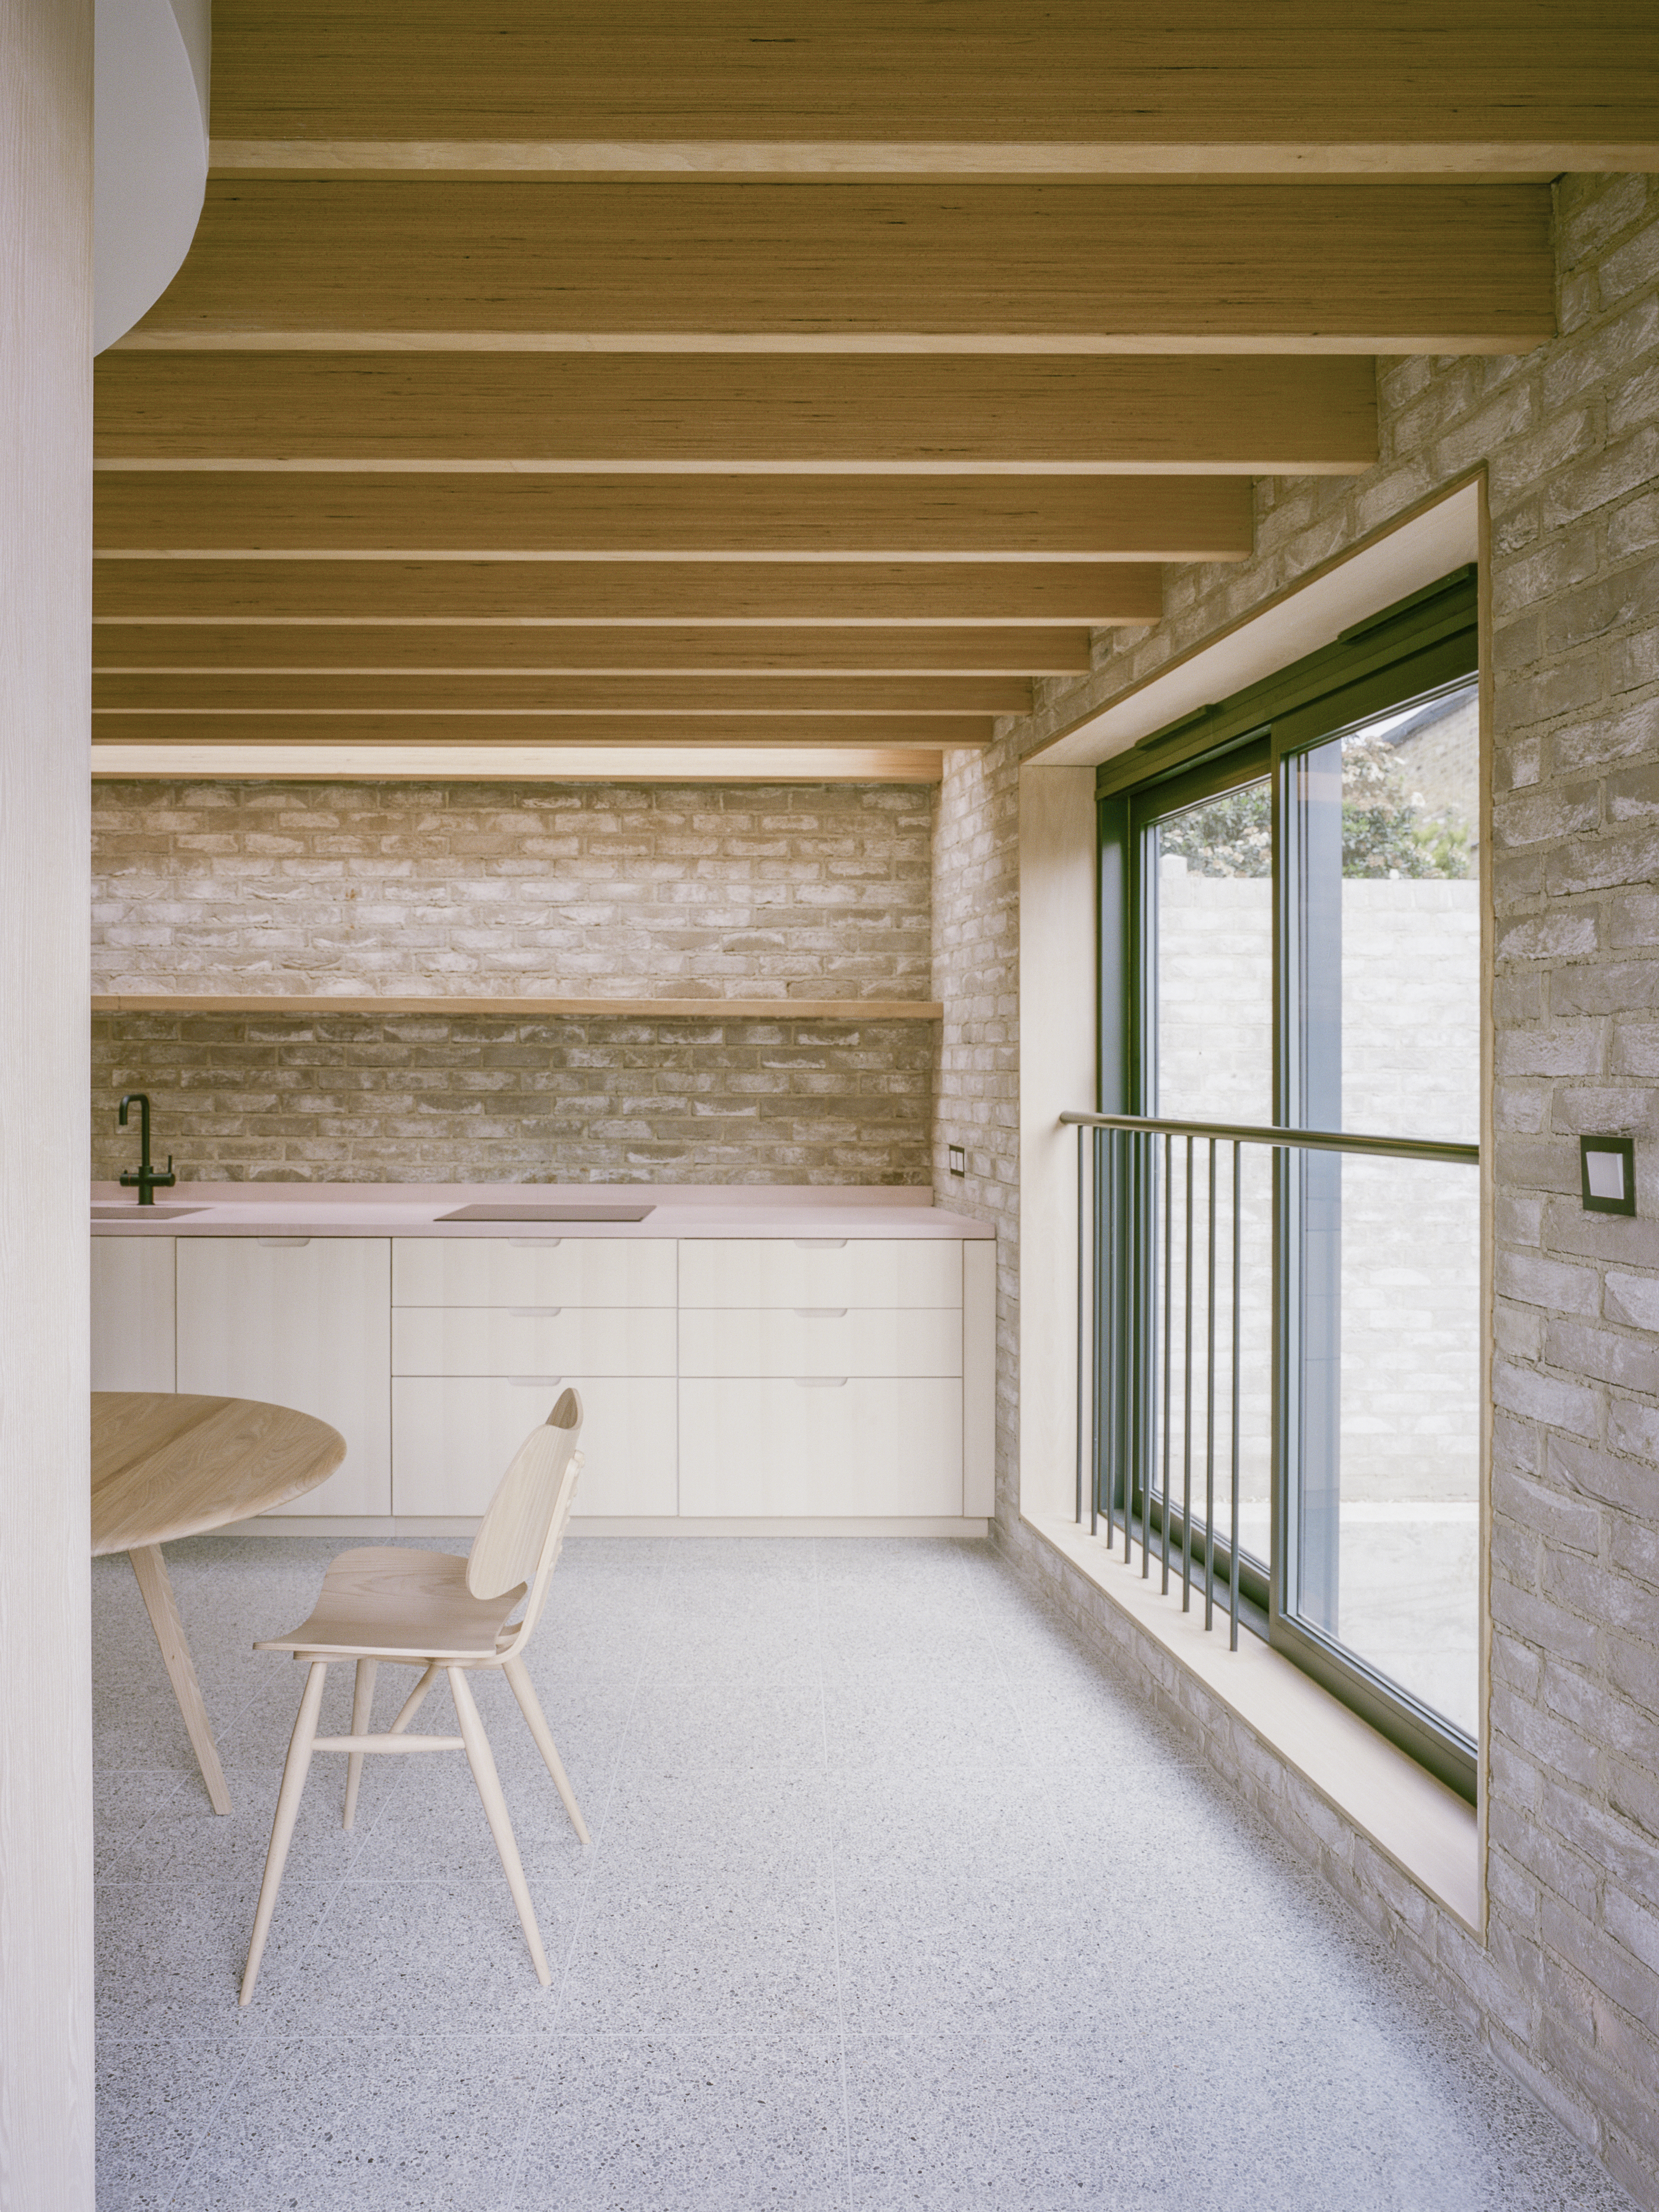 Fletcher Crane Architects Chooses Vandersanden Brick for Tree House Development